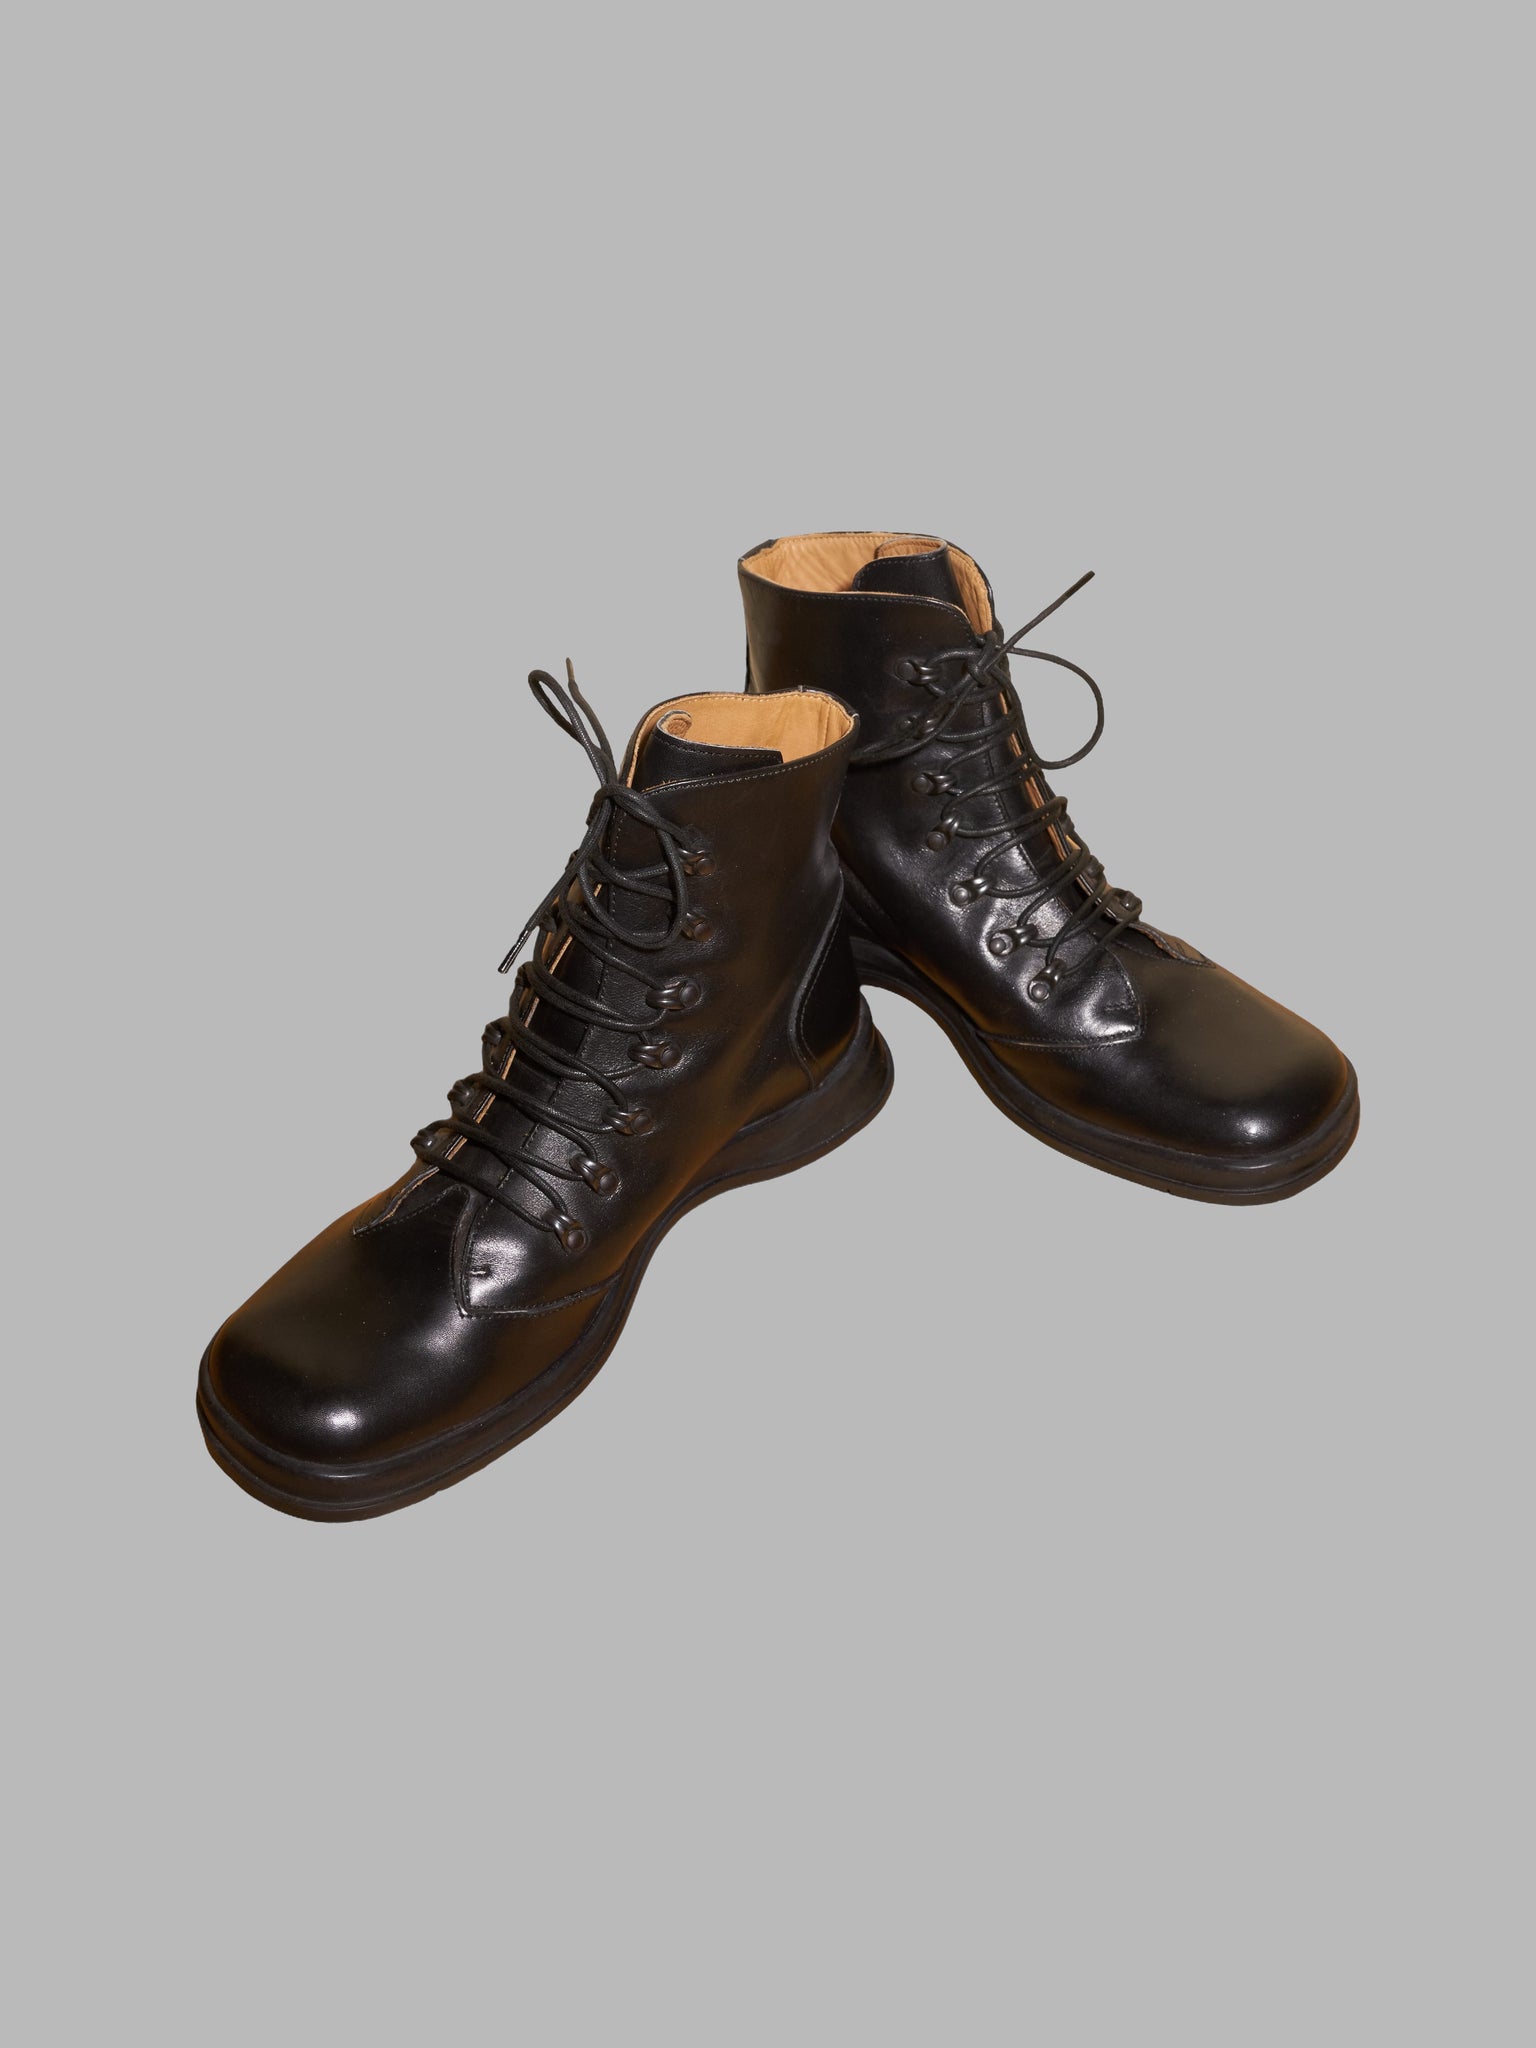 Mare Uomo black leather rubber sole army boots - size EU 39